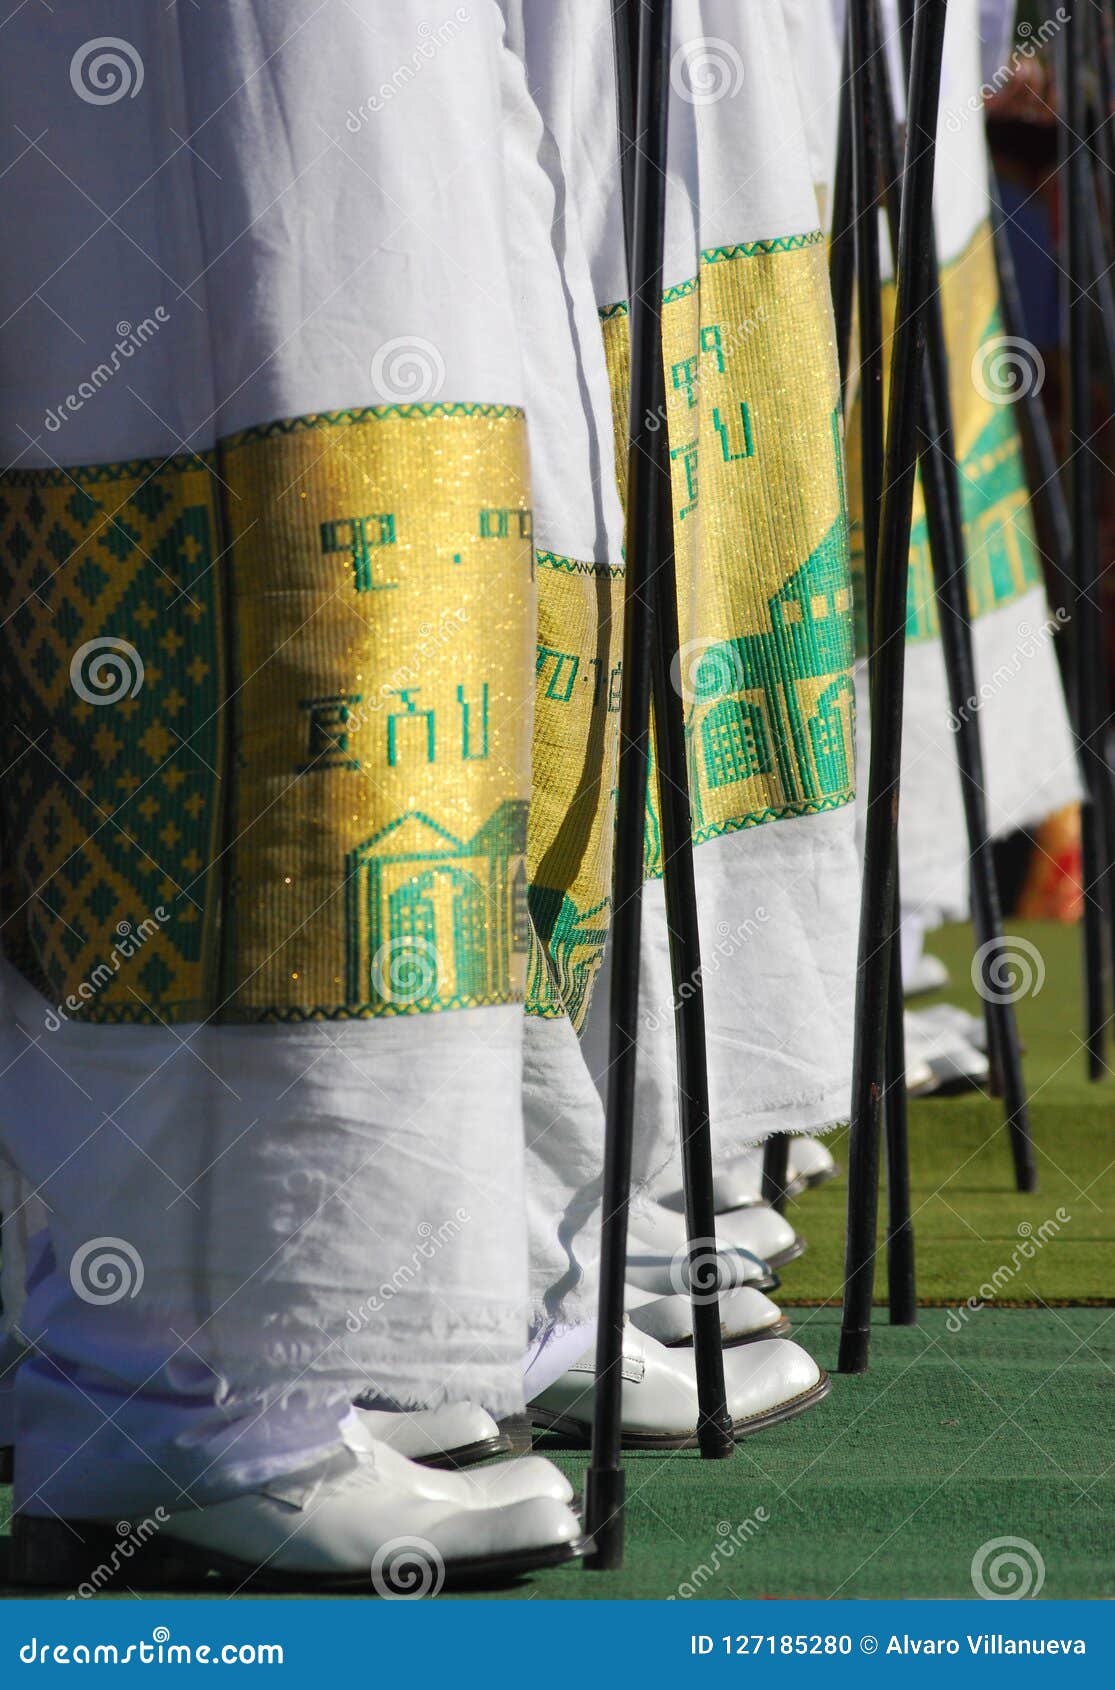 ethiopia, legs of orthodox priests